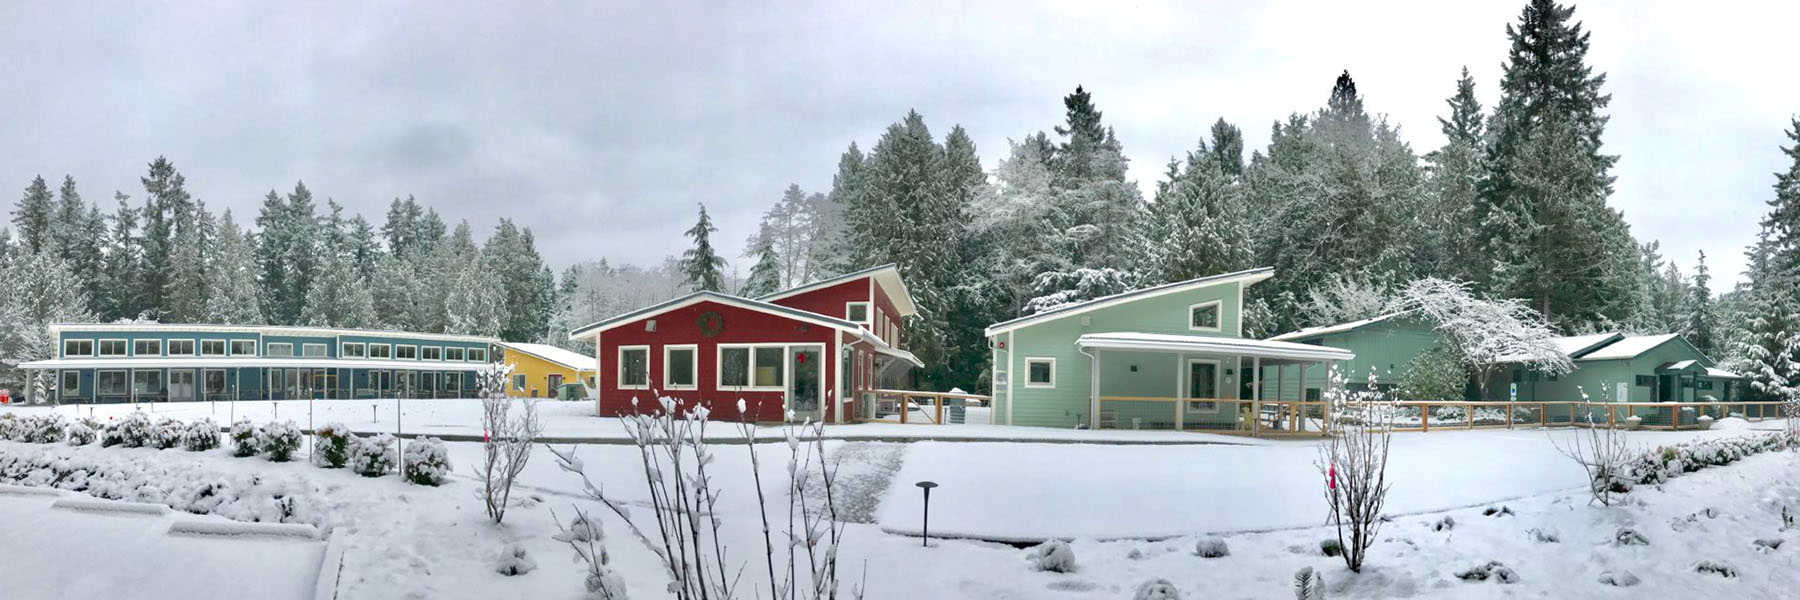 Montessori Country School covered in fresh snow